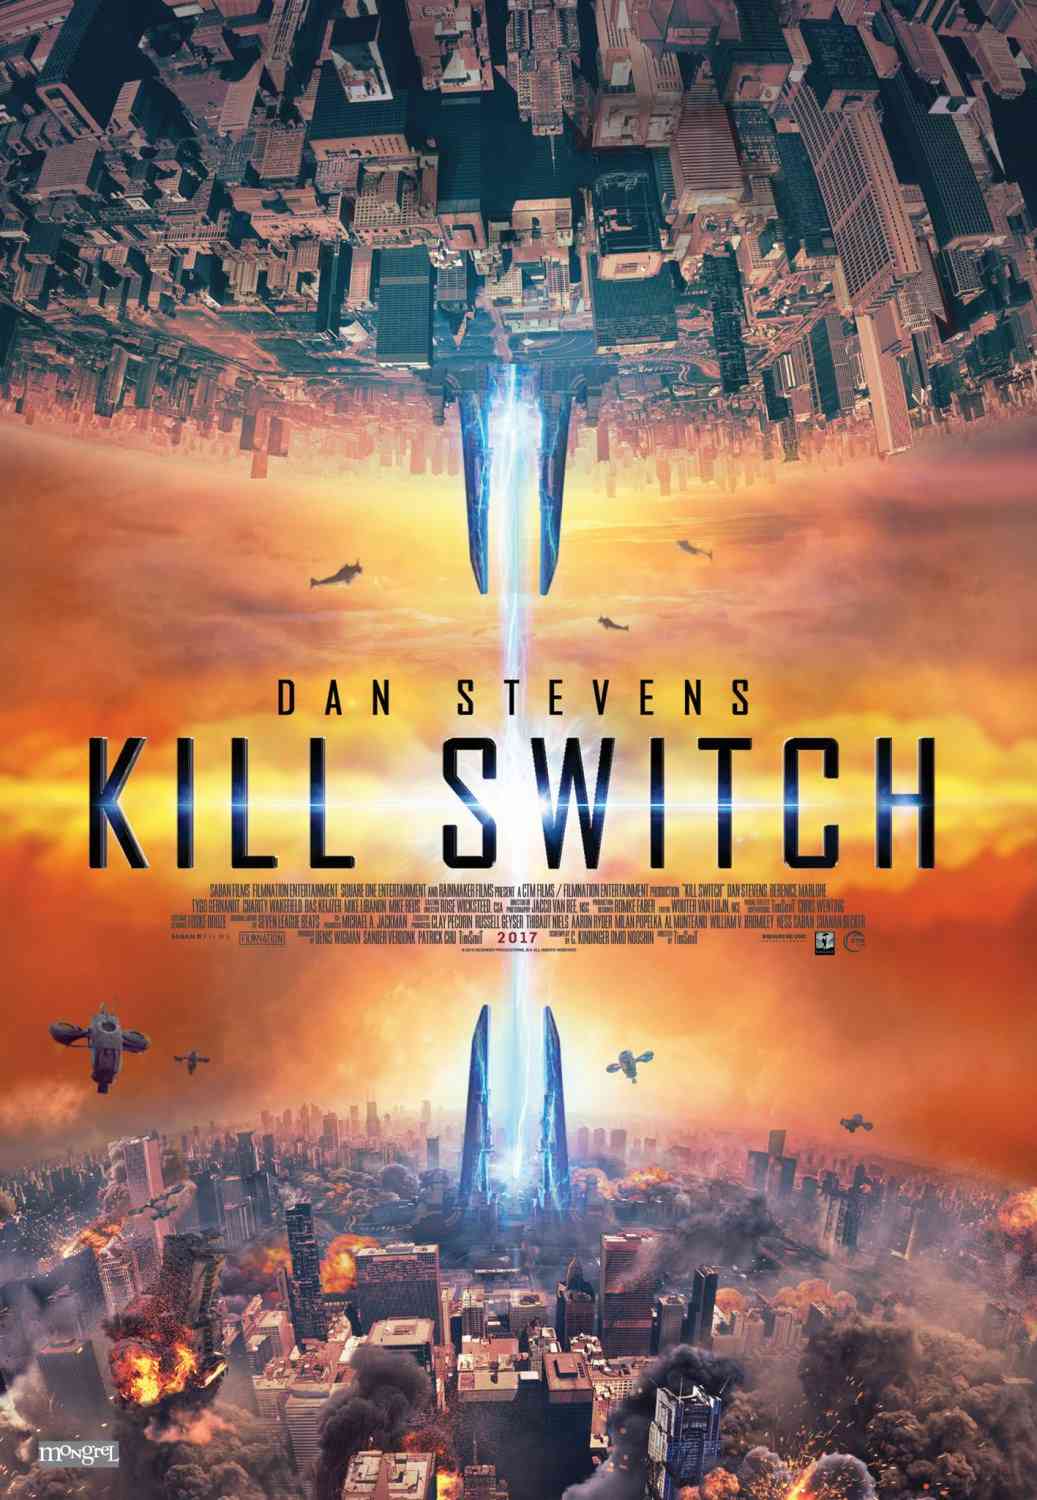 FULL MOVIE: Kill Switch (2017) [Action]